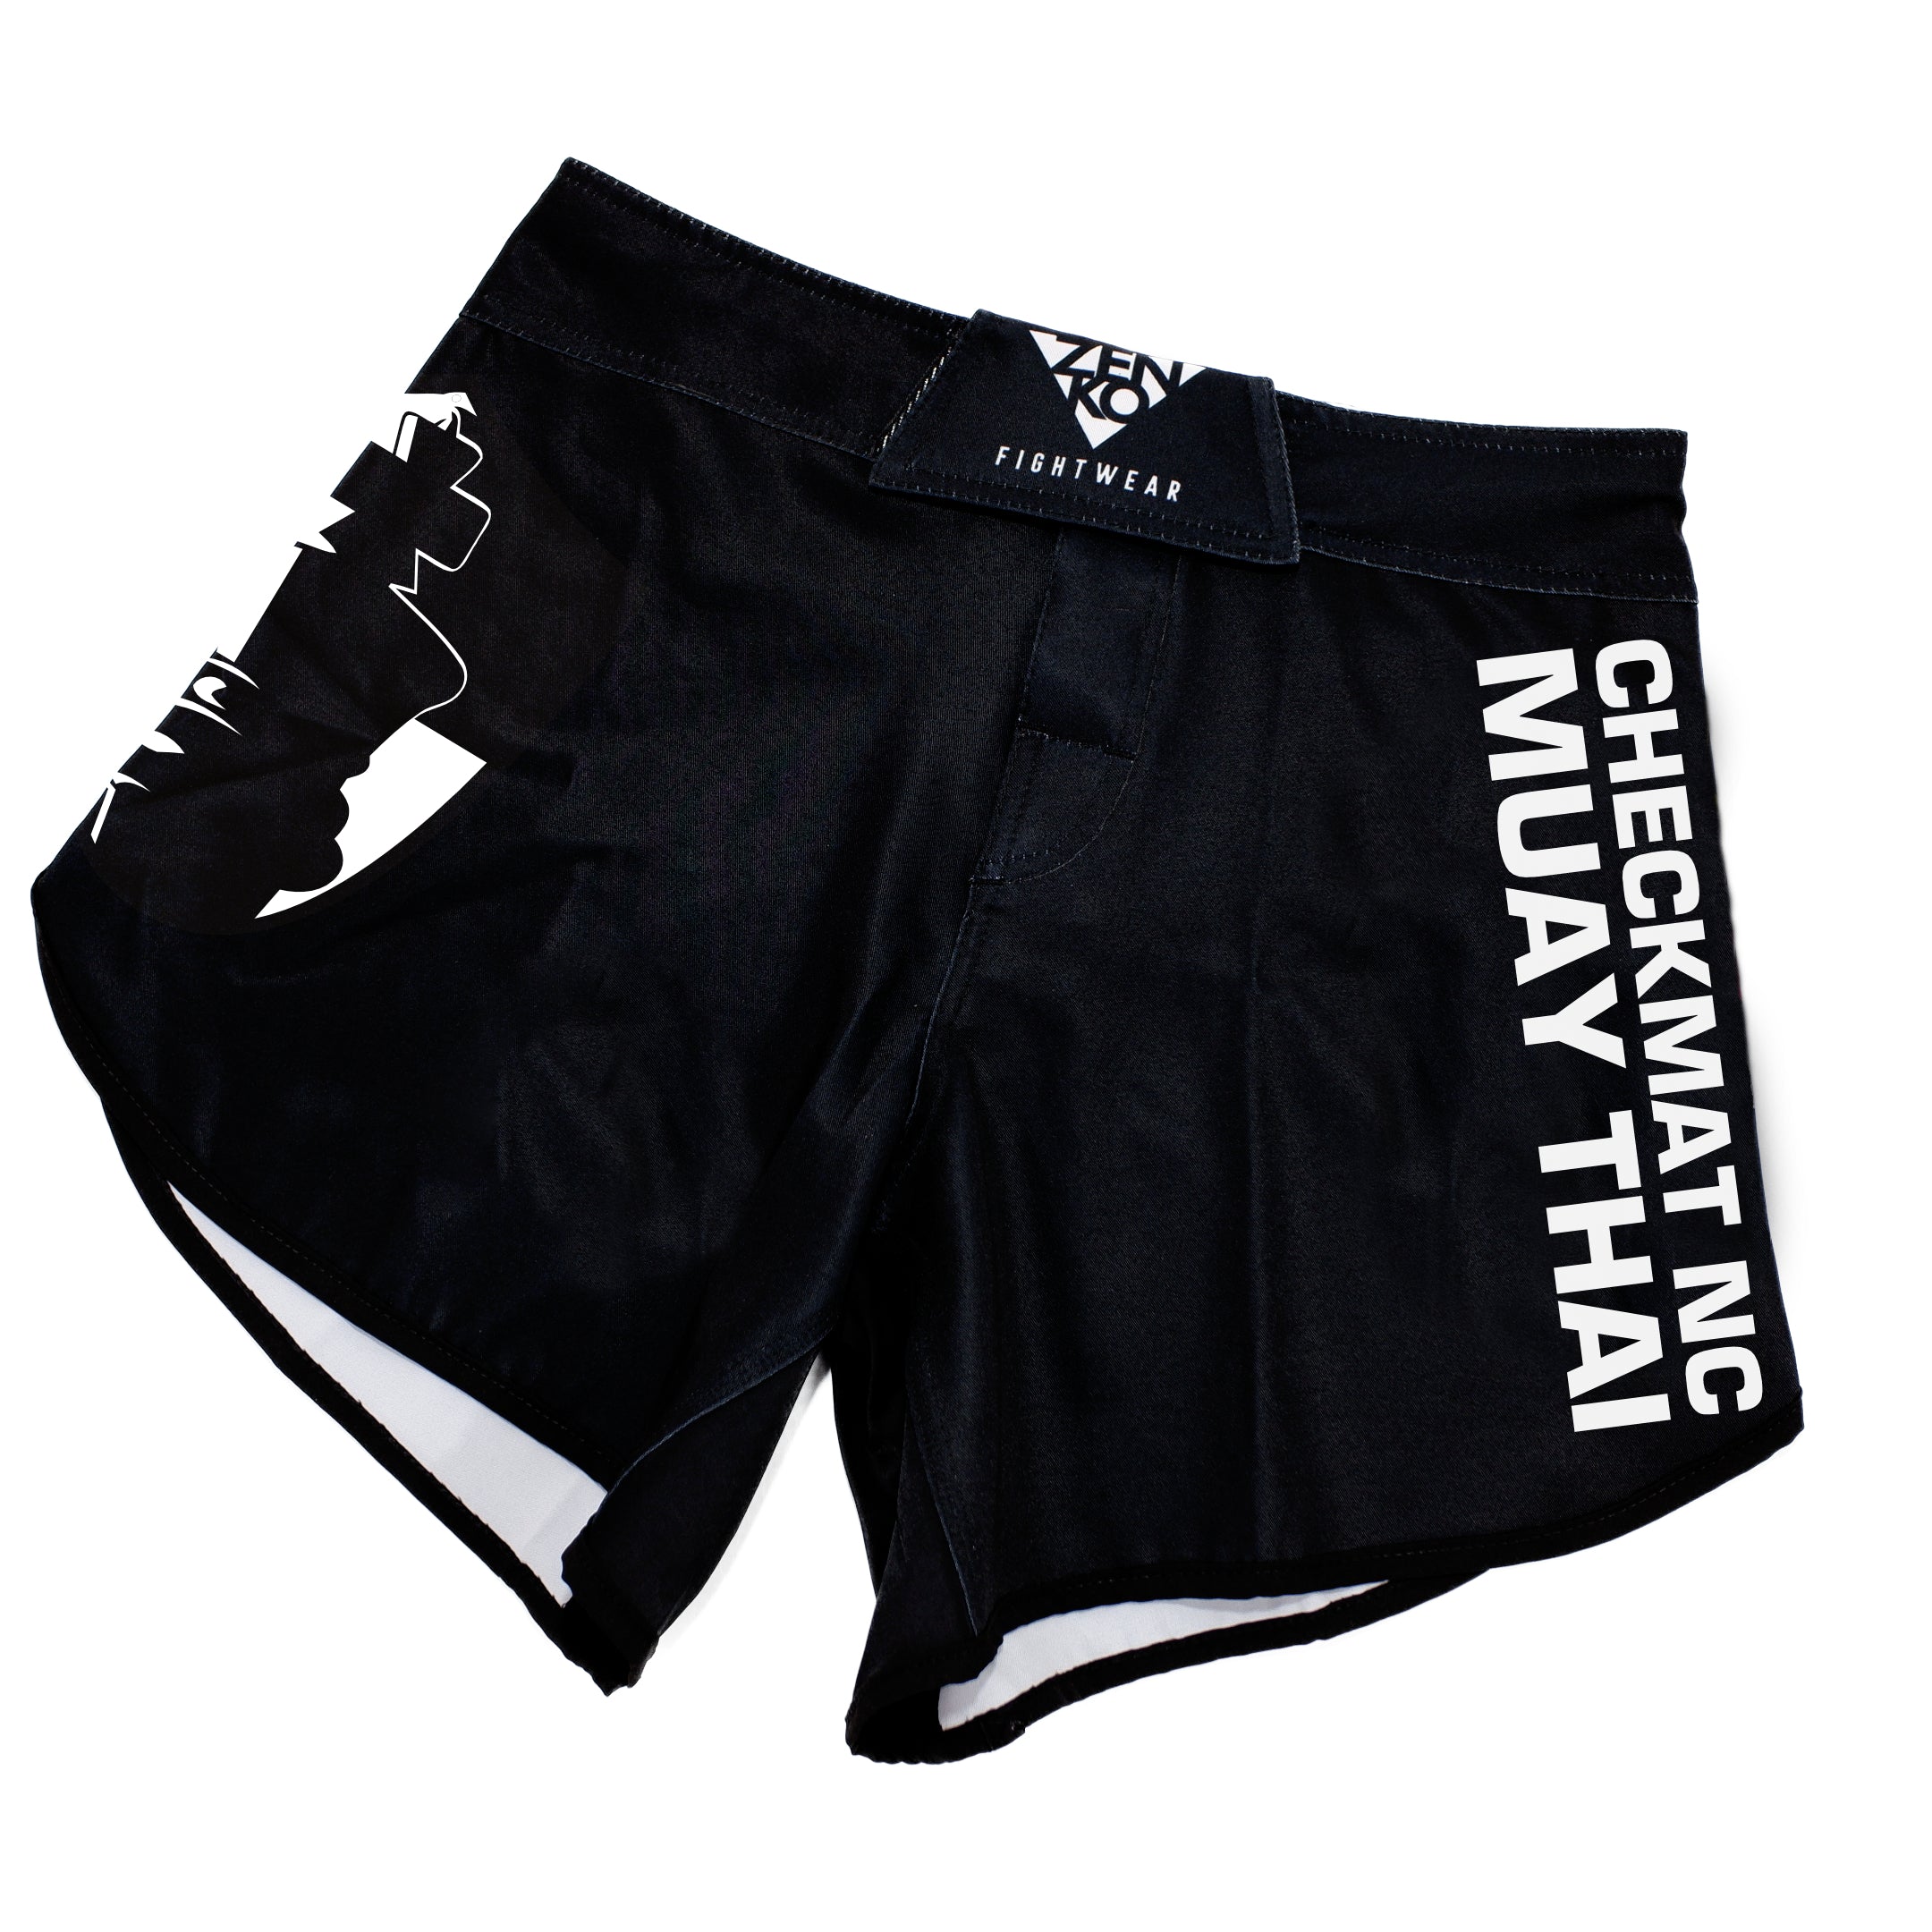 Checkmat NC Muay Thai Kickboxing Shorts